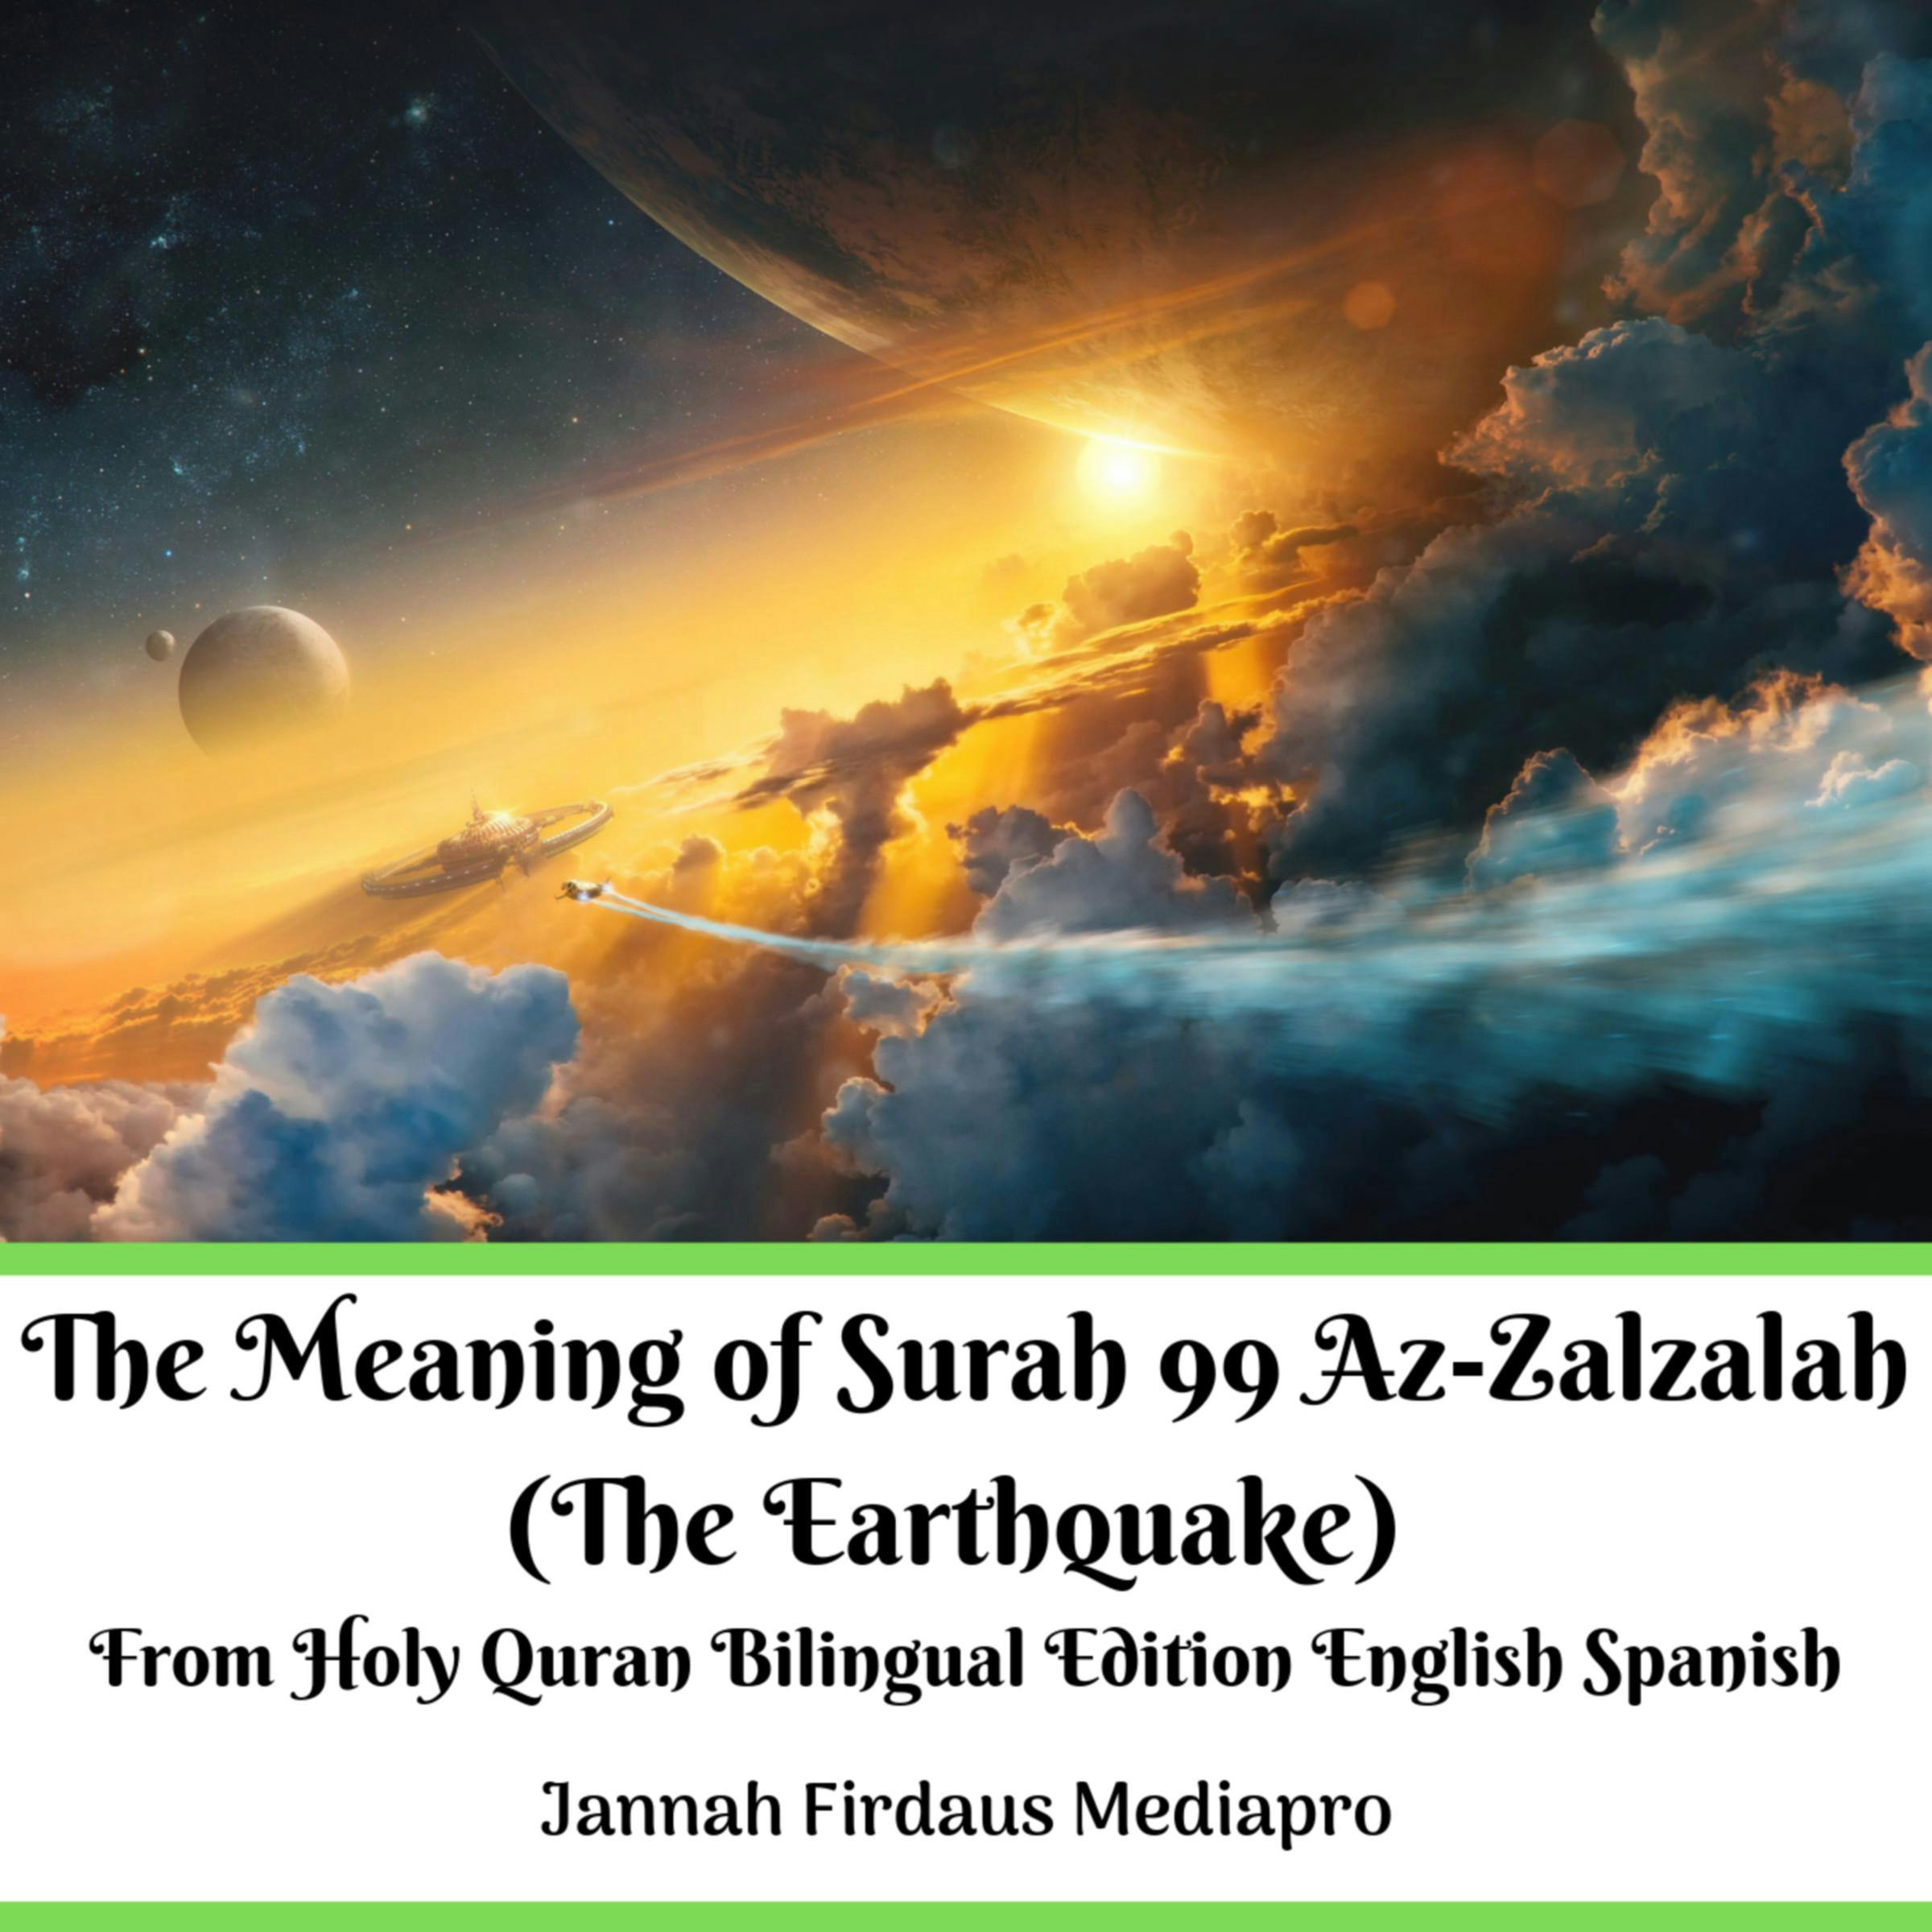 The Meaning of Surah 99 Az-Zalzalah (The Earthquake): From Holy Quran Bilingual Edition English Spanish - Jannah Firdaus Mediapro